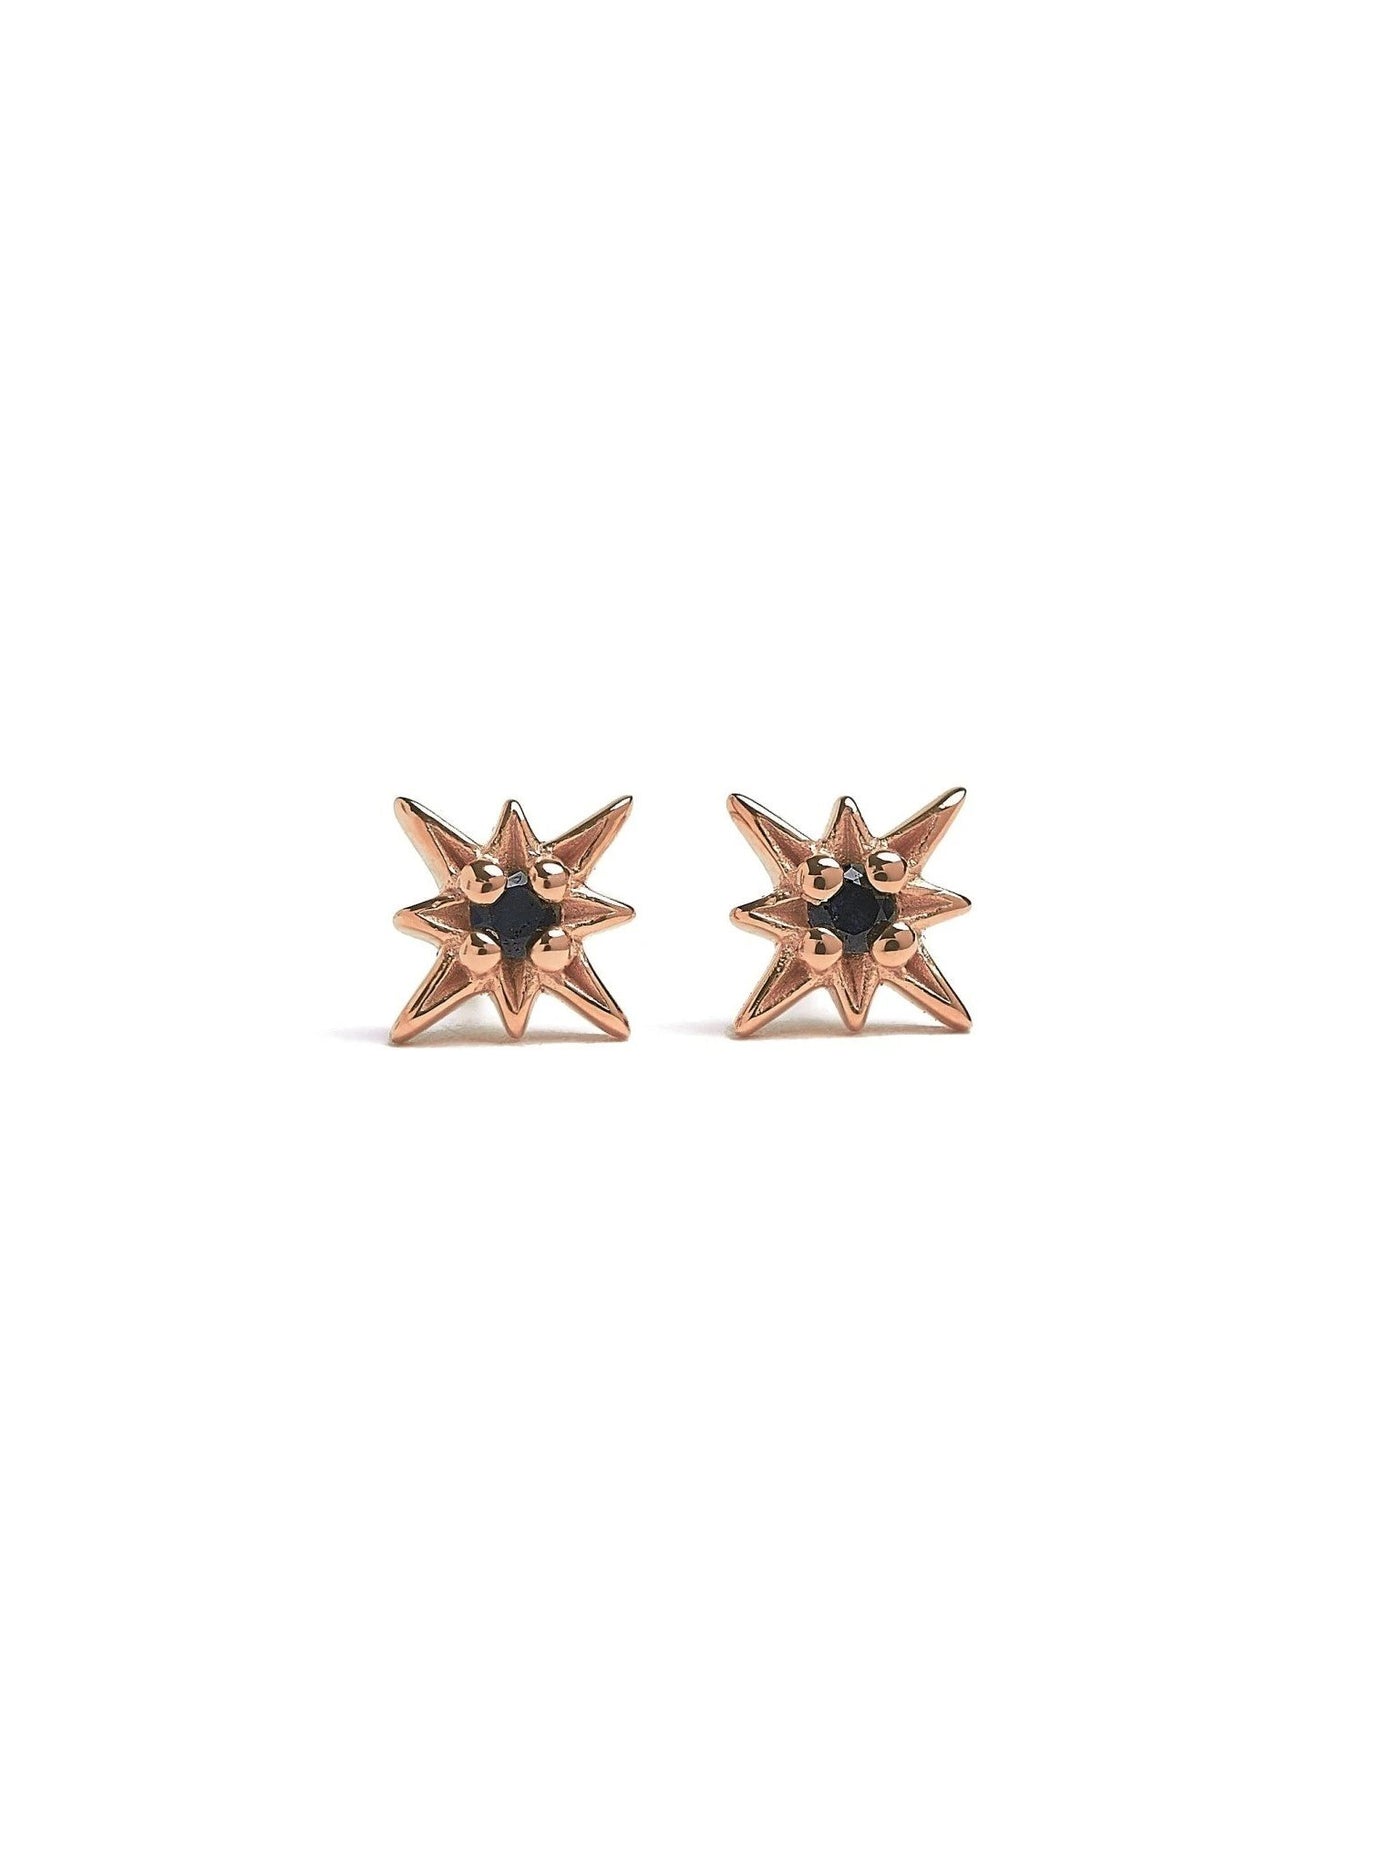 Sue Starburst Earrings - 18K Rose Gold PlatedBackUpItemsbirthday giftLunai Jewelry